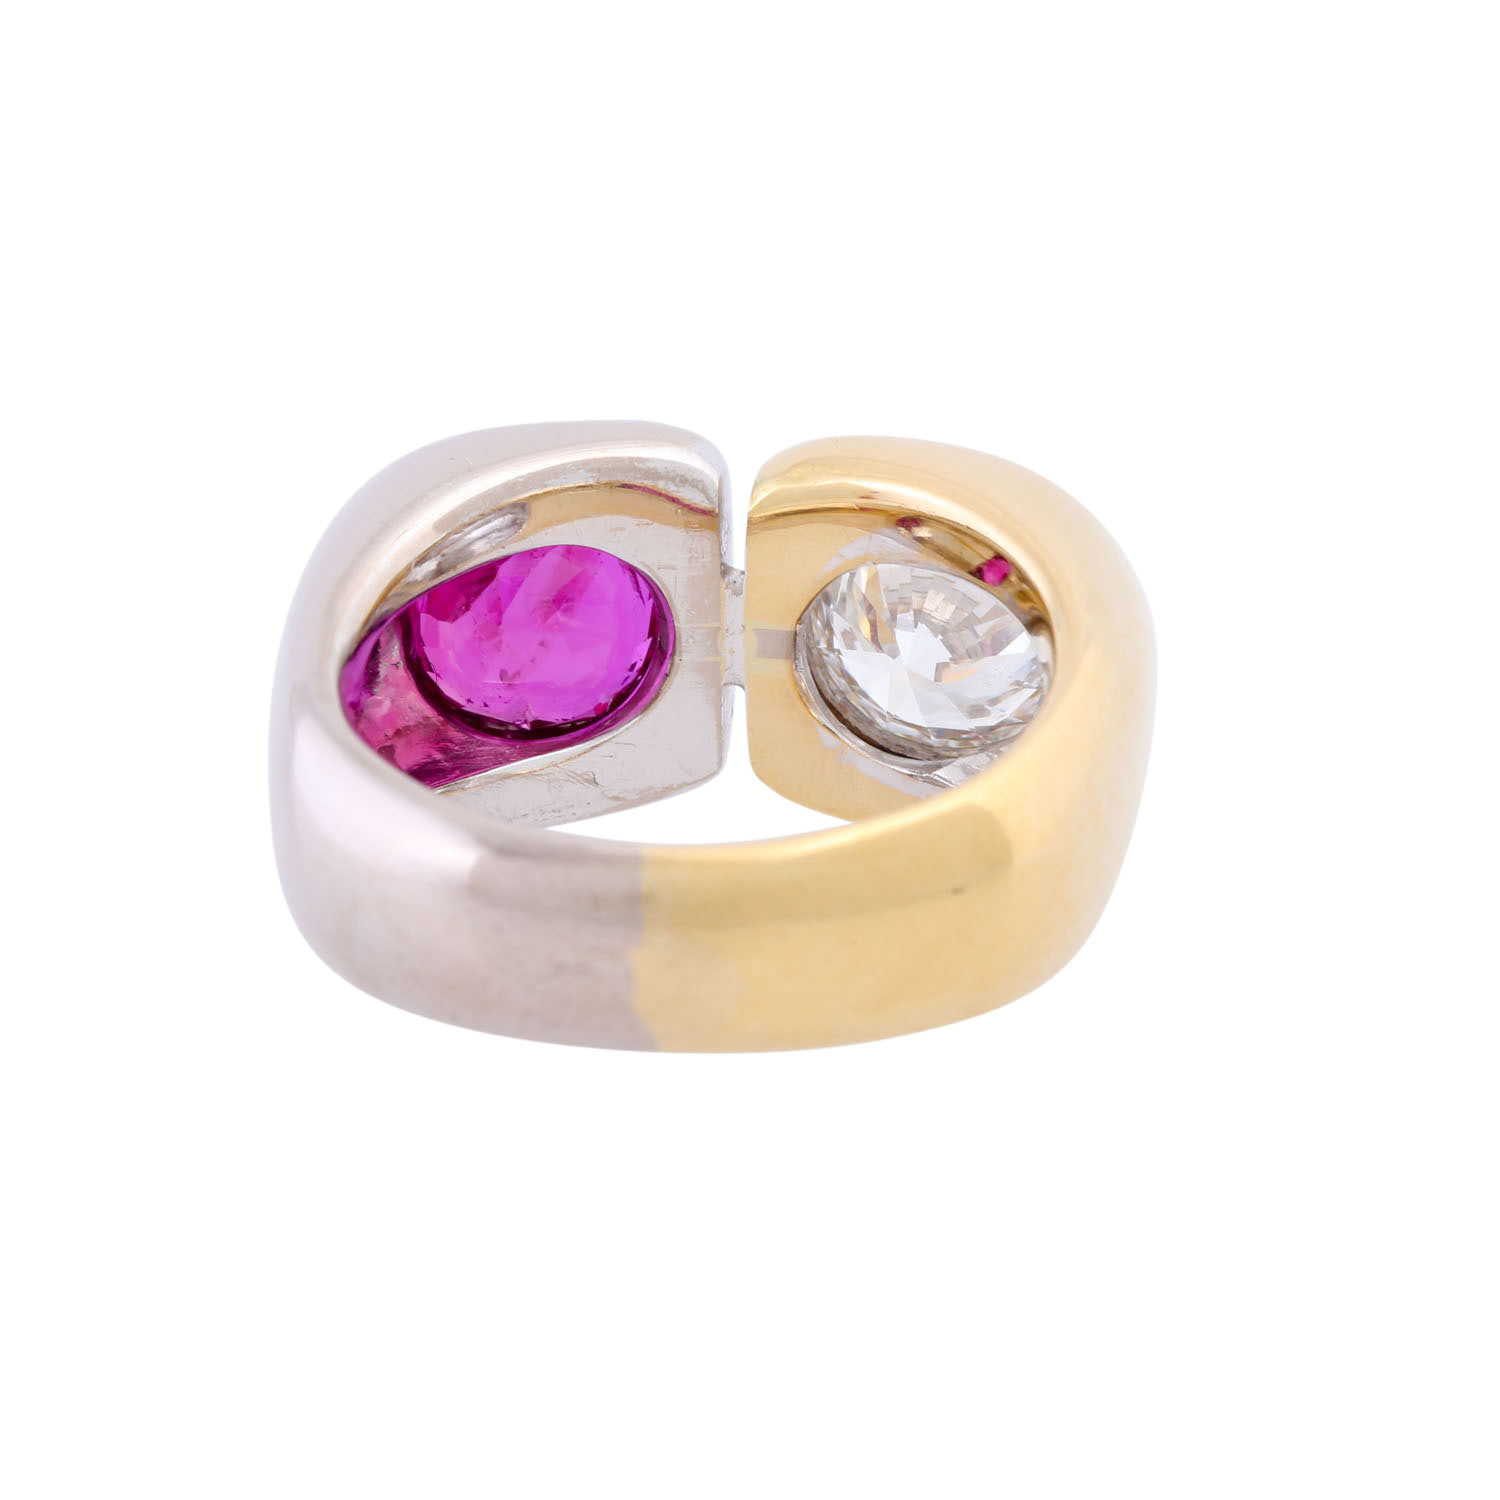 Ring mit Rubin ca. 2,1 ct und Brillant ca. 1,7 ct, - Image 4 of 5